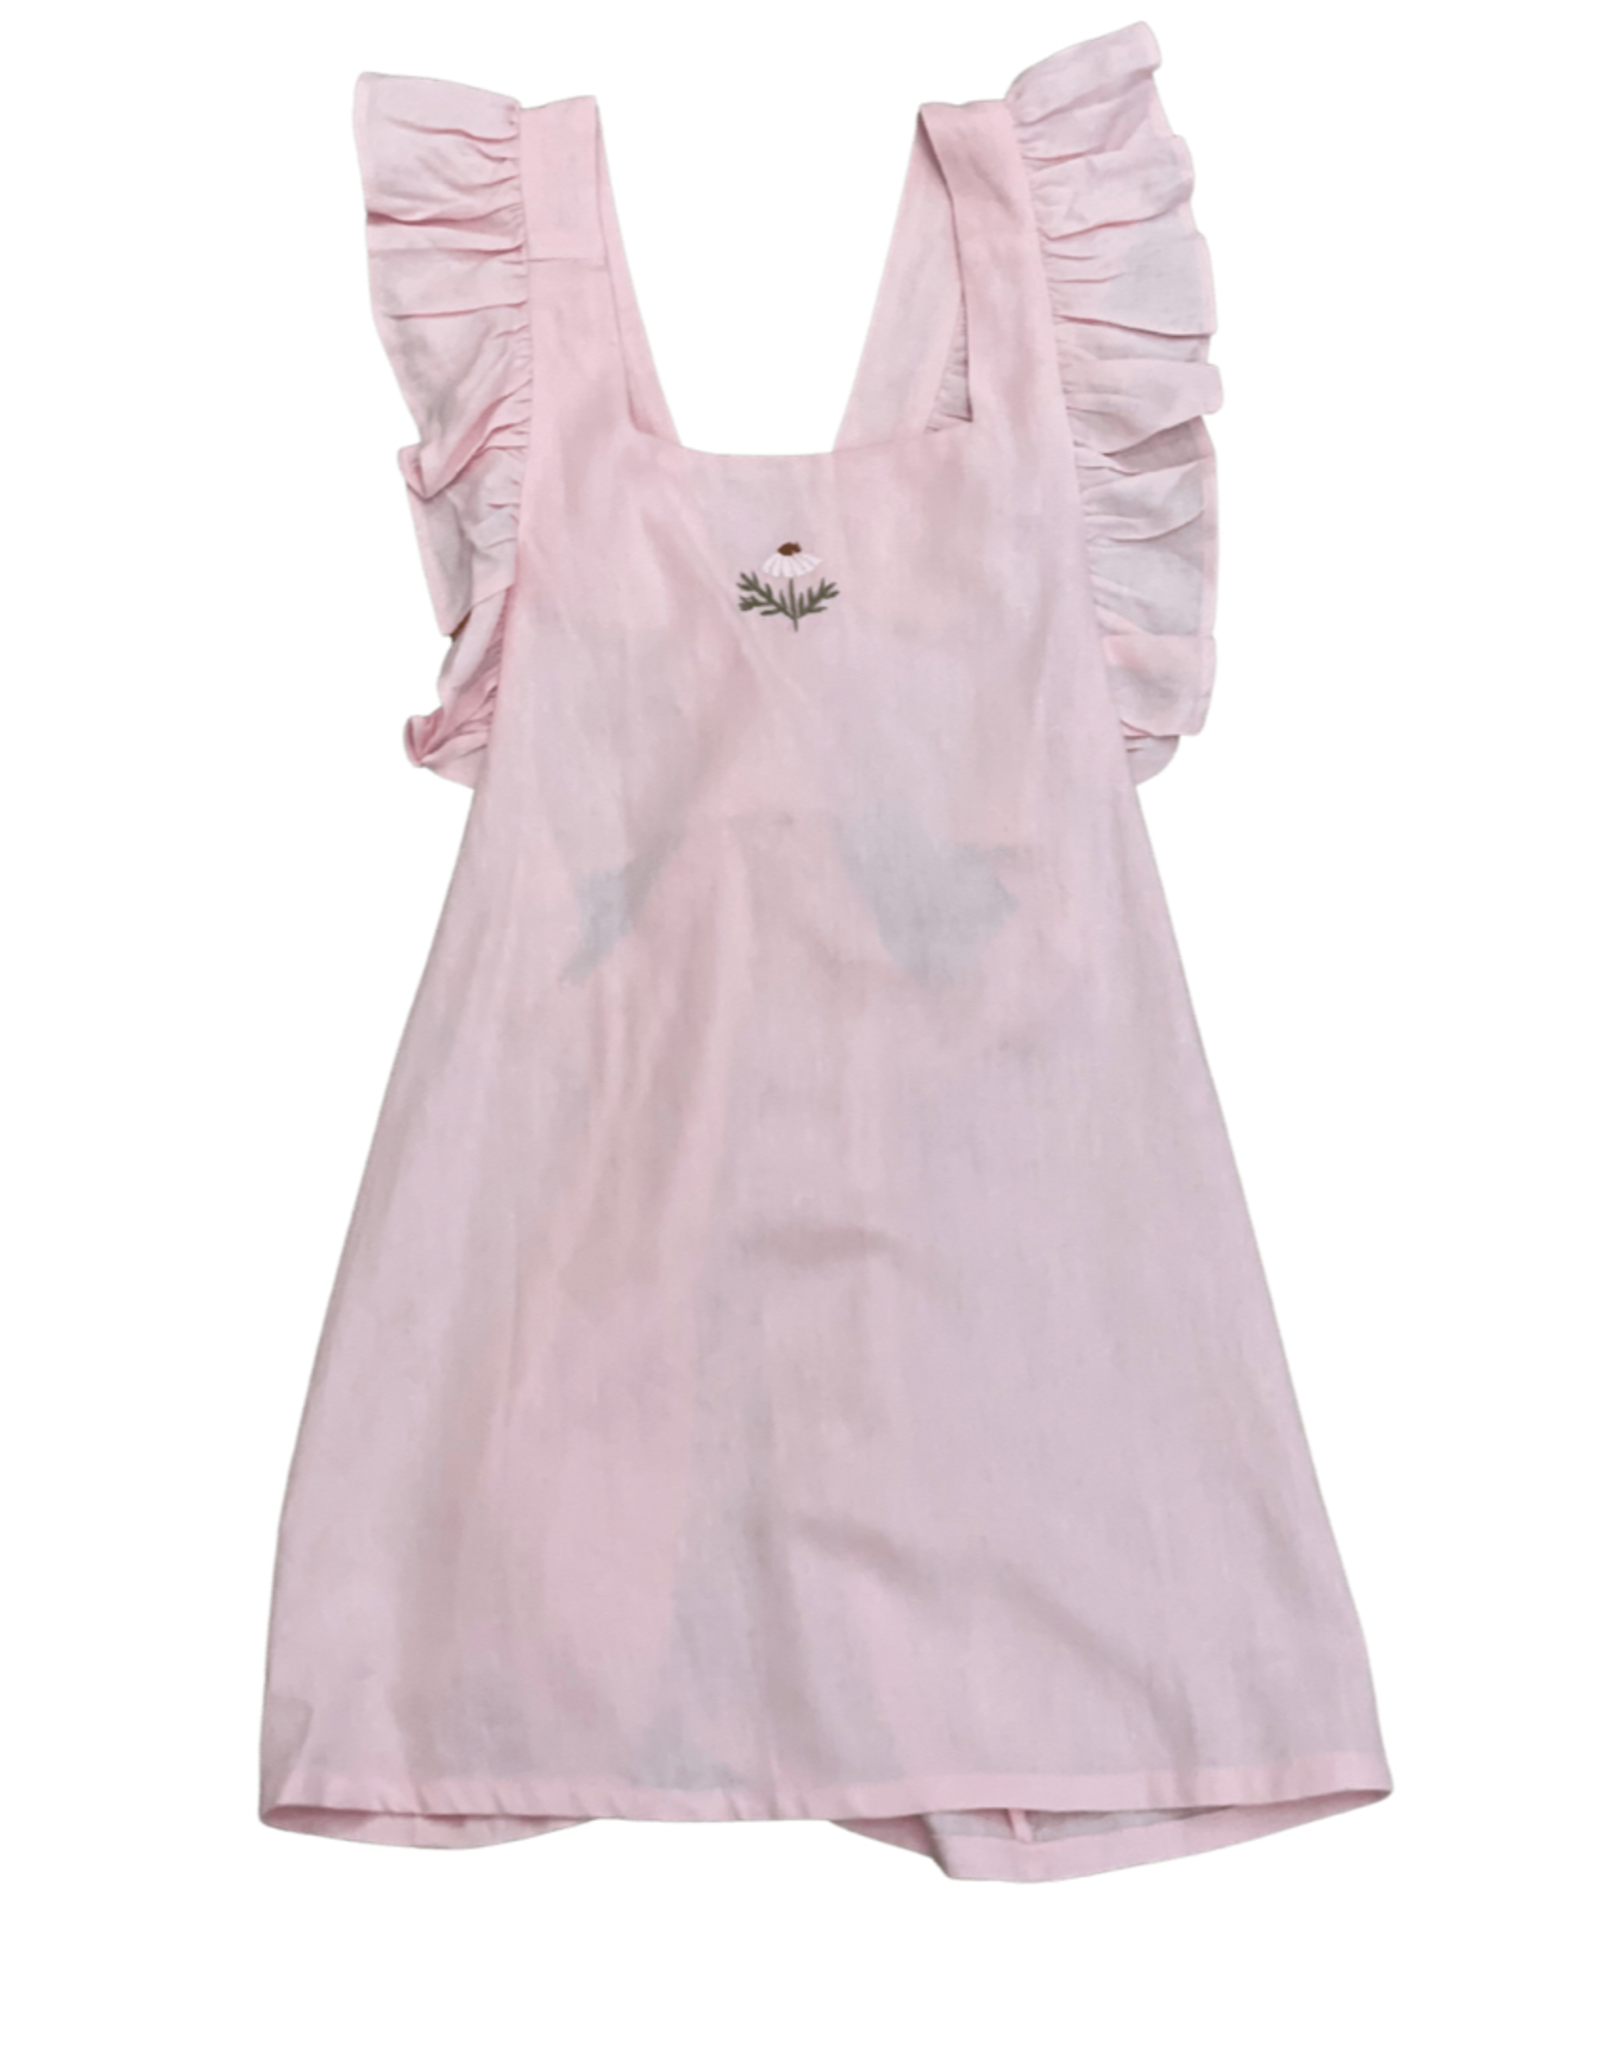 Daisy Pinafore Dress Pink 6T